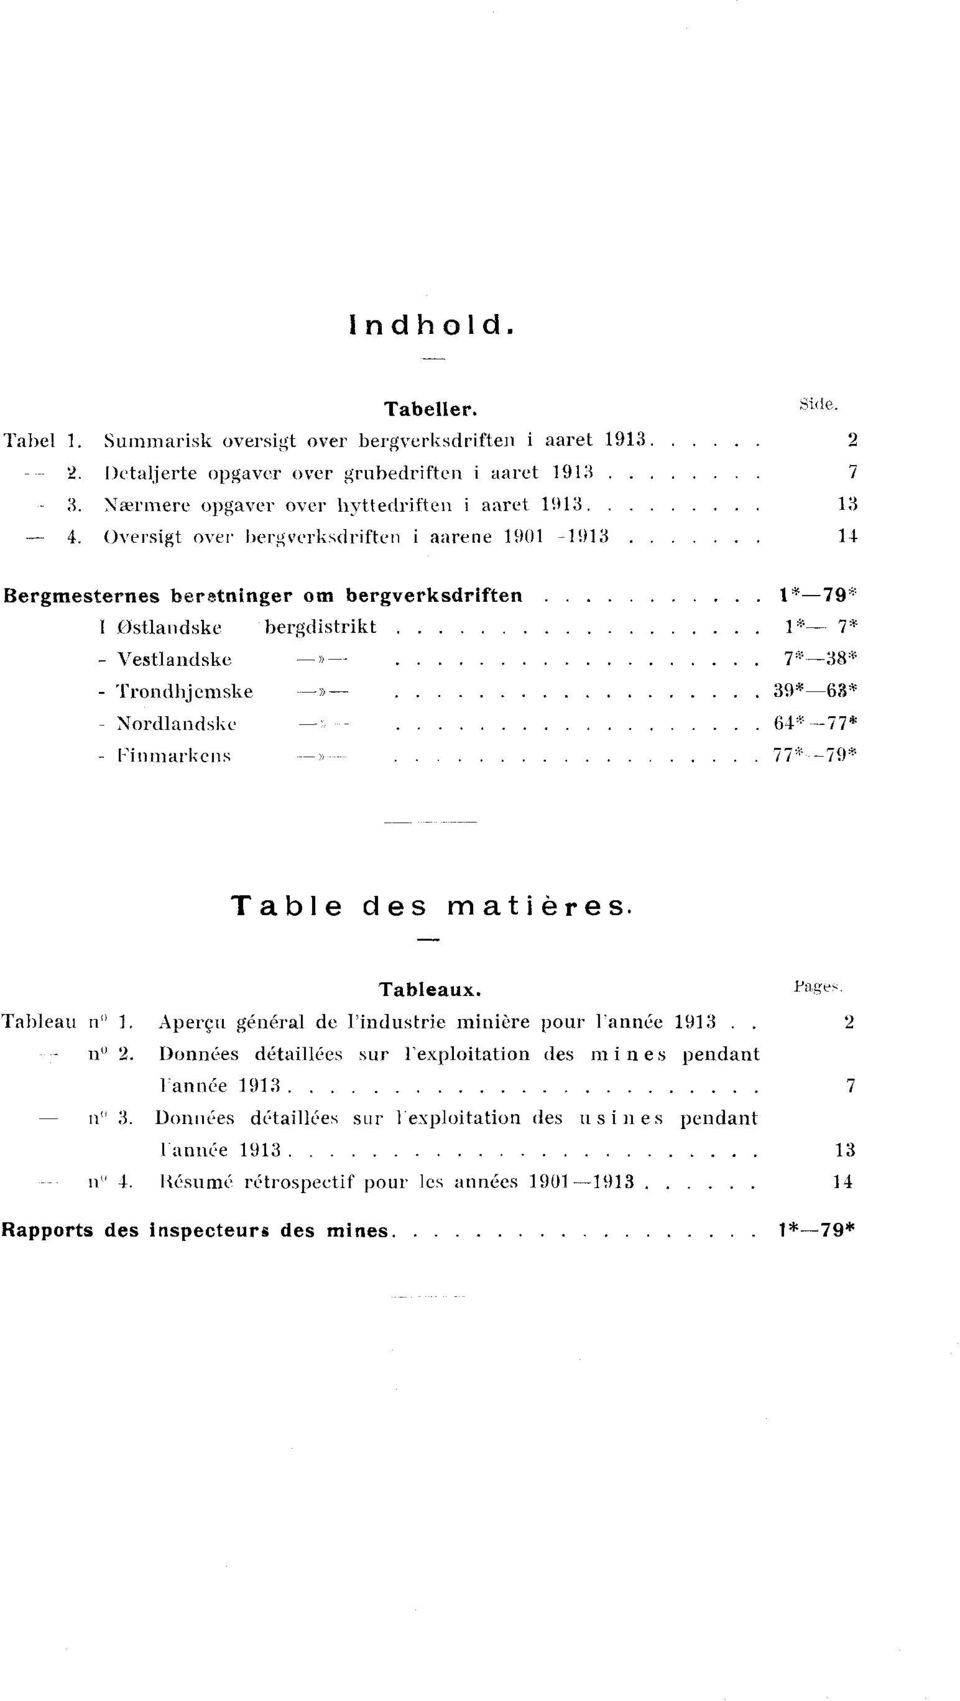 Oversigt over bergverksdriften i aarene 1901----1913 14 Bergmesternes beretninger om bergverksdriften P-79* I Østlandske bergdistrikt 1* Vestlandske» 75-38'5 - Trondhjemske» 39-63* -